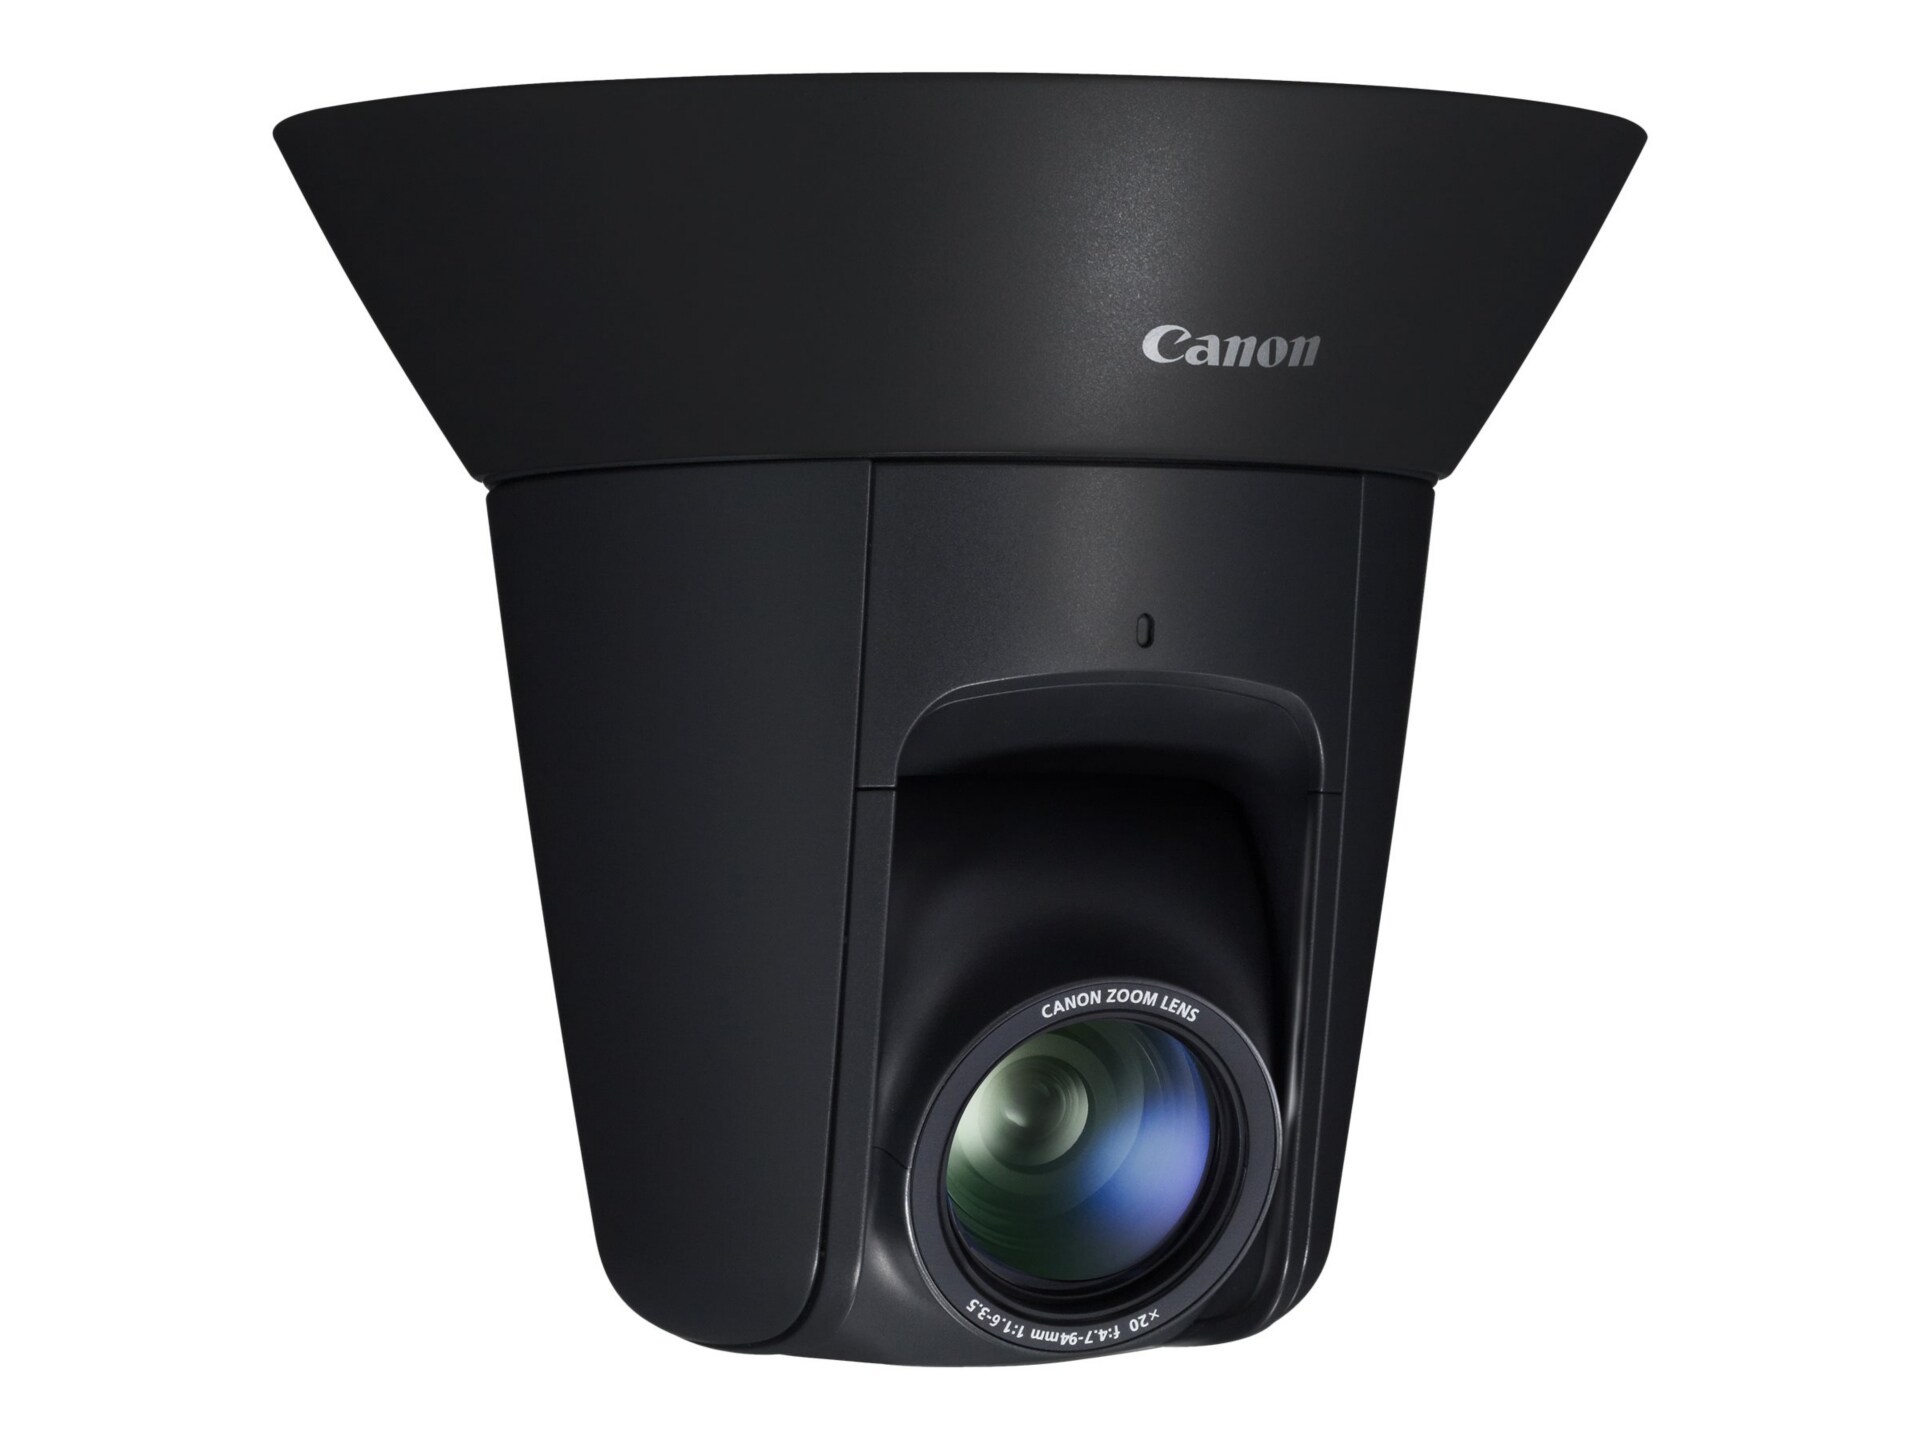 Canon VB-M44B - network surveillance camera